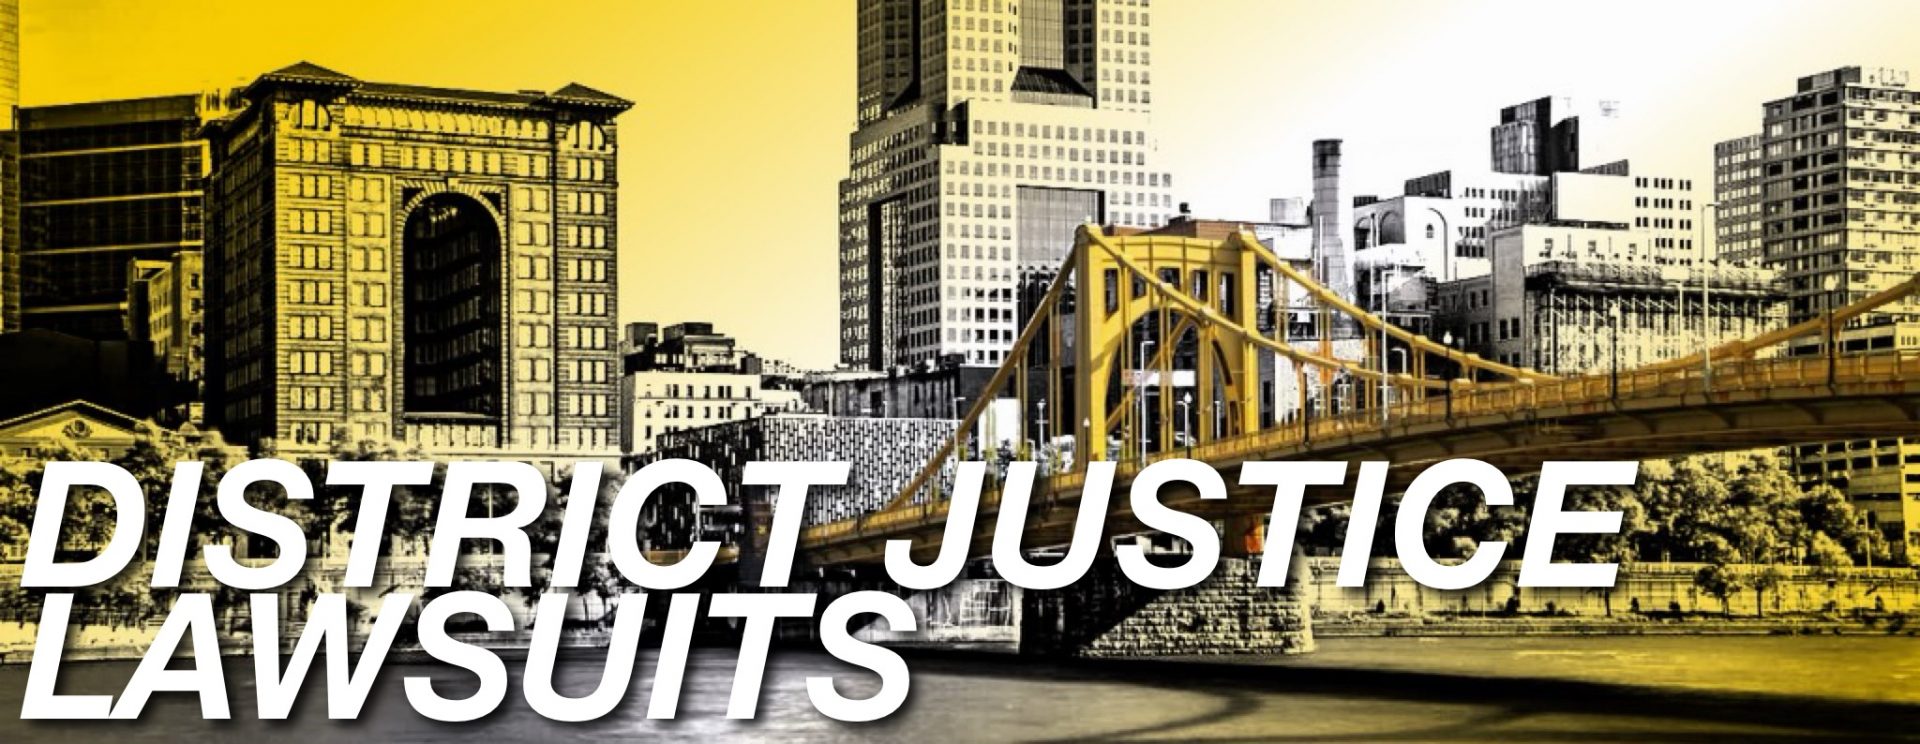 district justice lawsuits